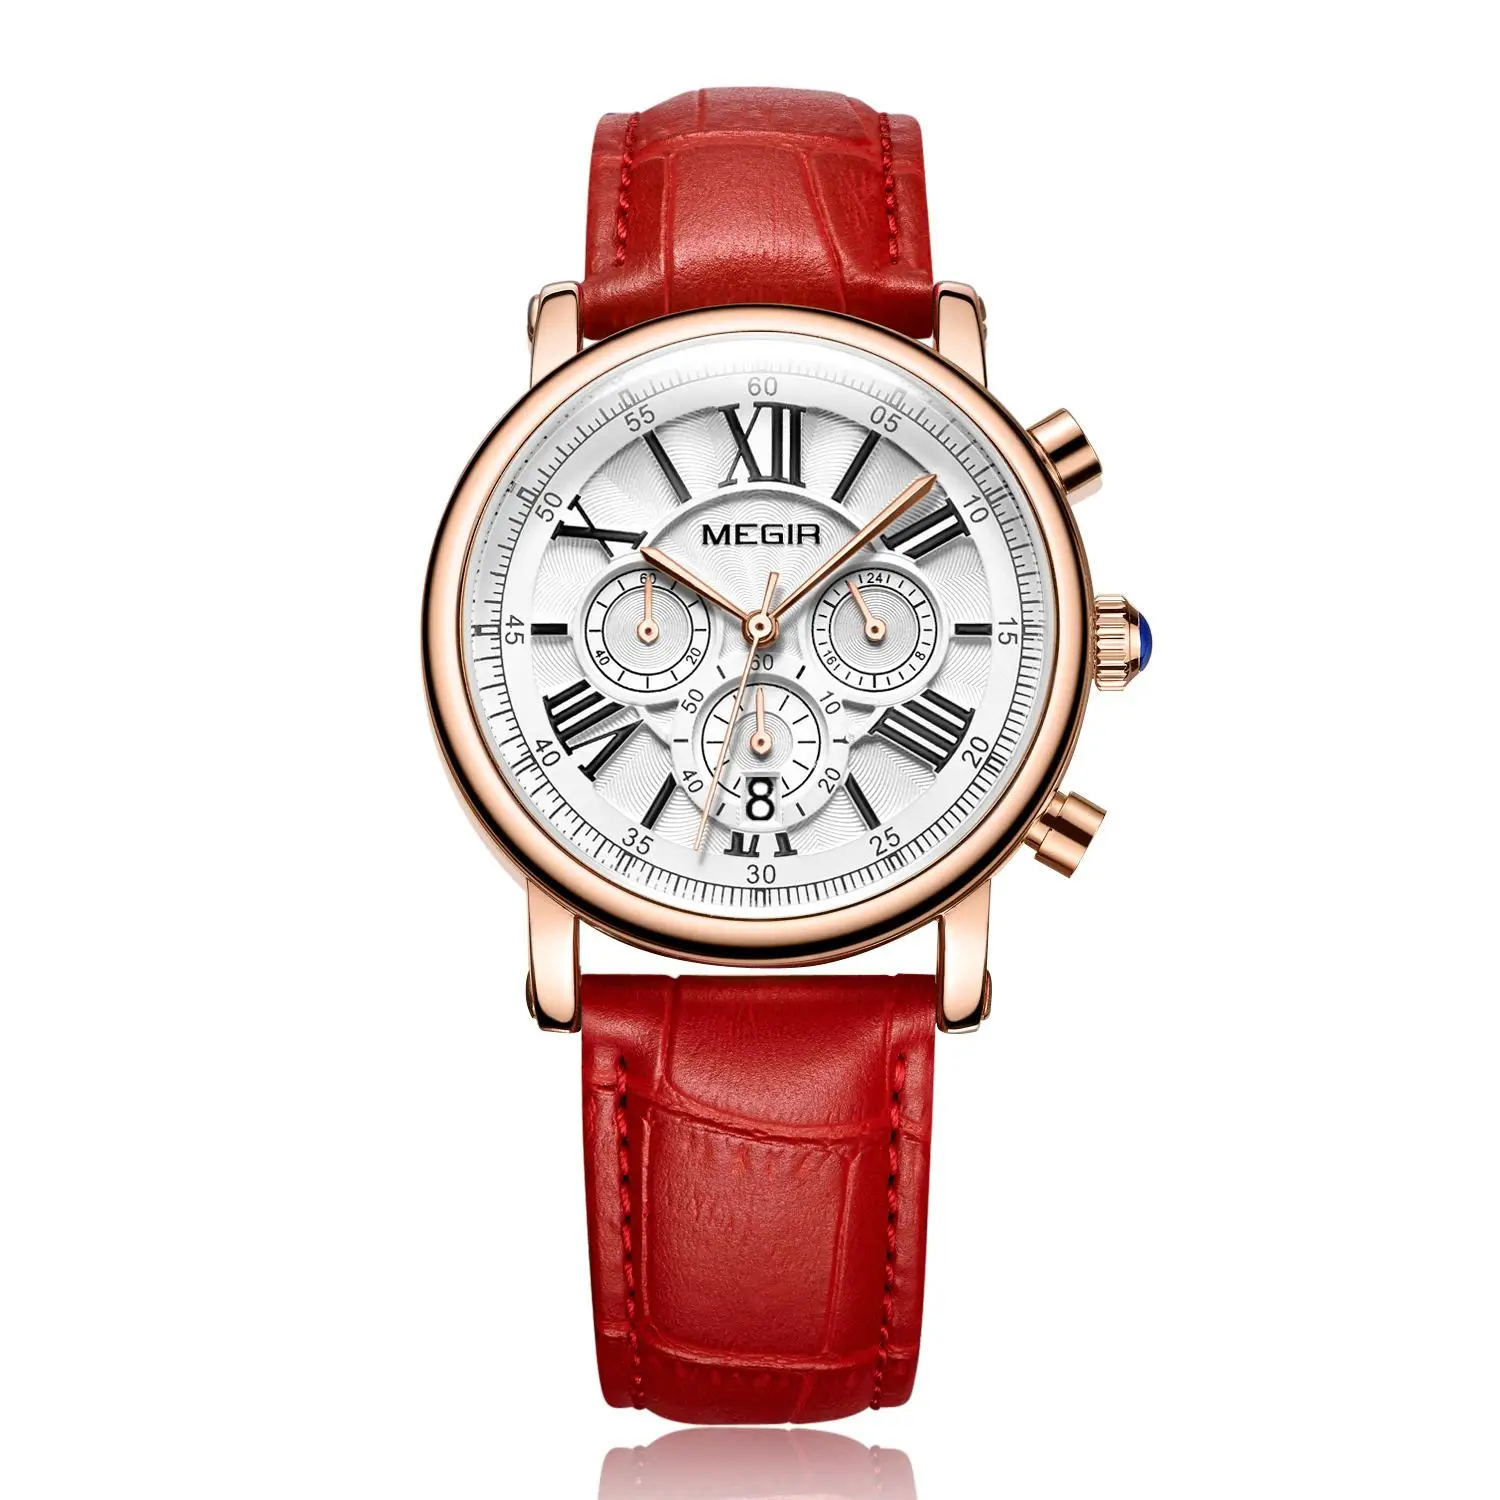 

New Arrivals MEGIR Woman Fashion Designer Red And White Leather Belt Wristwatch Movement Quartz Elegant Lady Watch Free Shipping